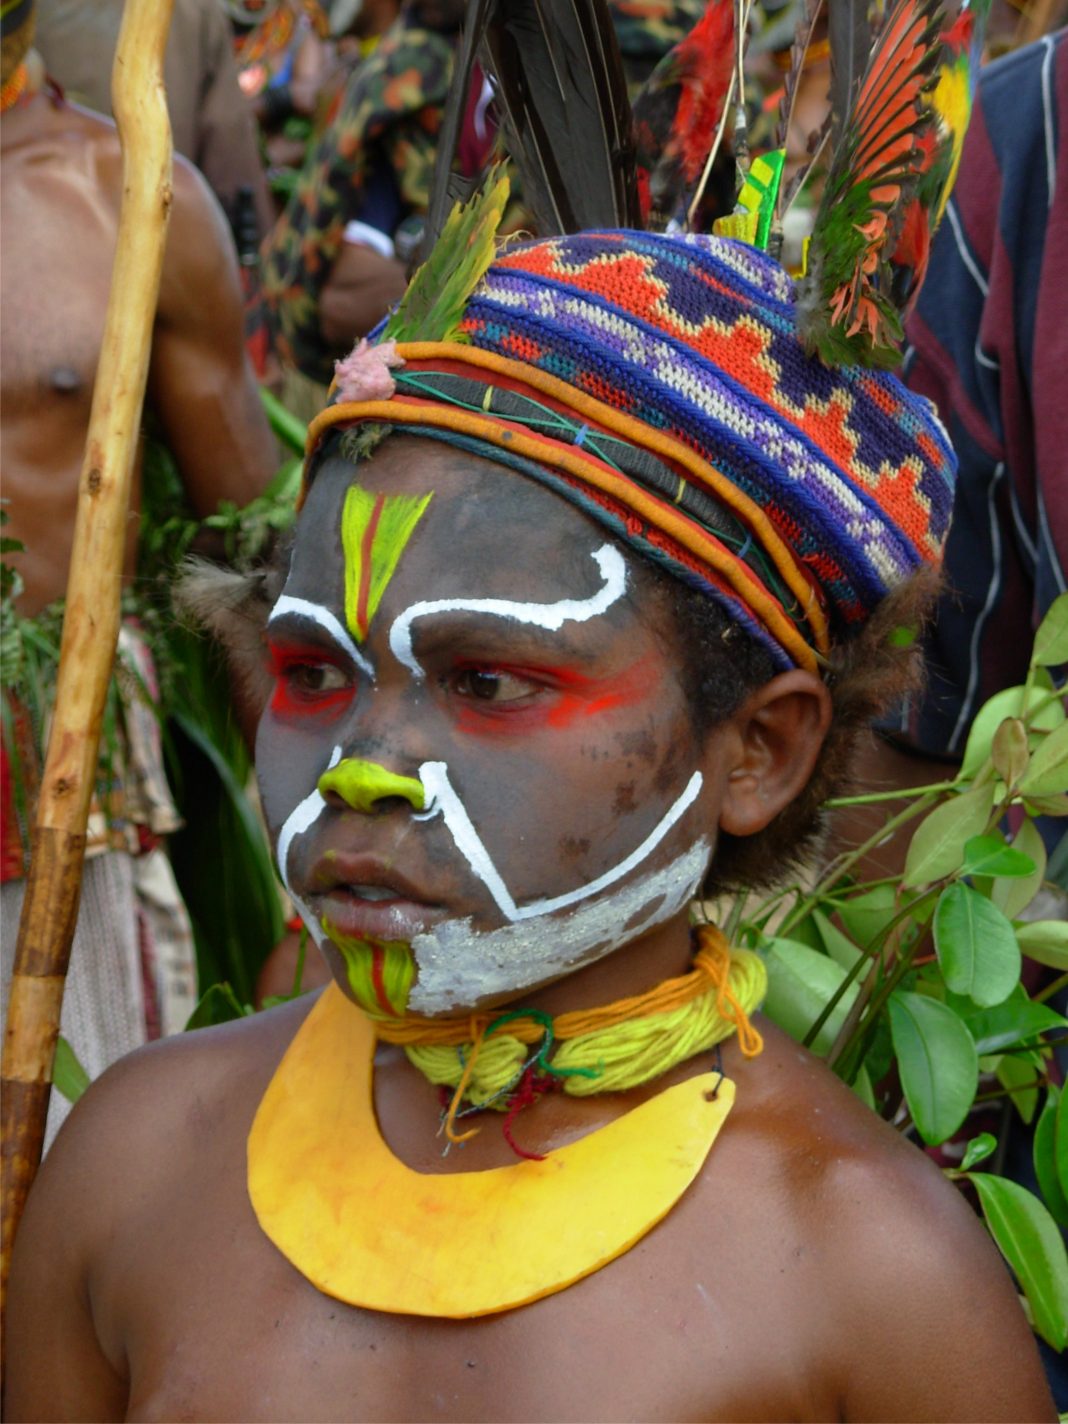 Diana Todisco – “Sing Sing” Papua Nuova Guineahttps://www.exibart.com/repository/media/eventi/2015/06/diana-todisco-8211-8220sing-sing8221-papua-nuova-guinea-6-1068x1424.jpg